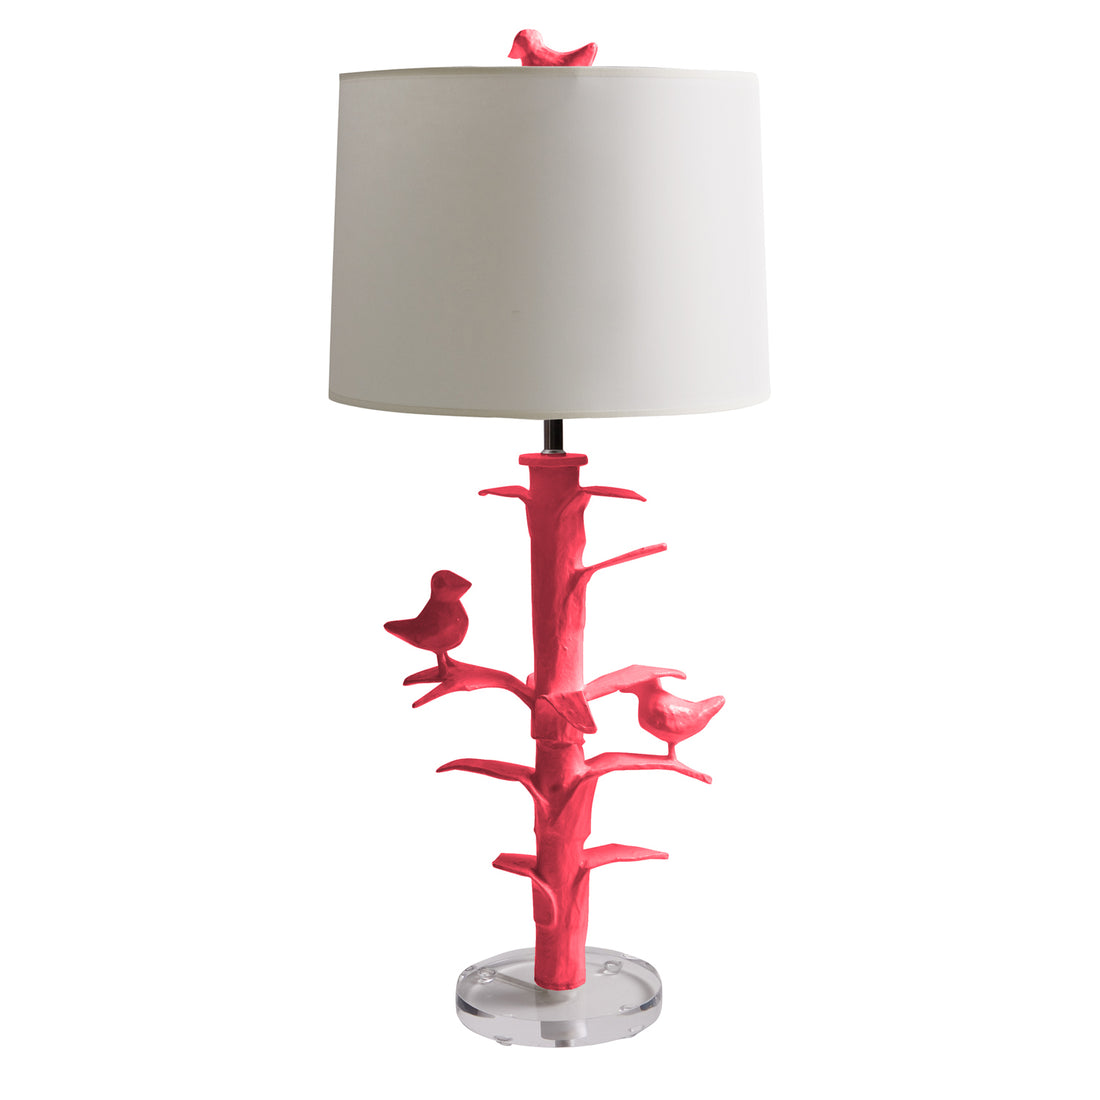 Sarah Bird Lamp, pink papier mache with 2 birds in a tree. Stray Dog